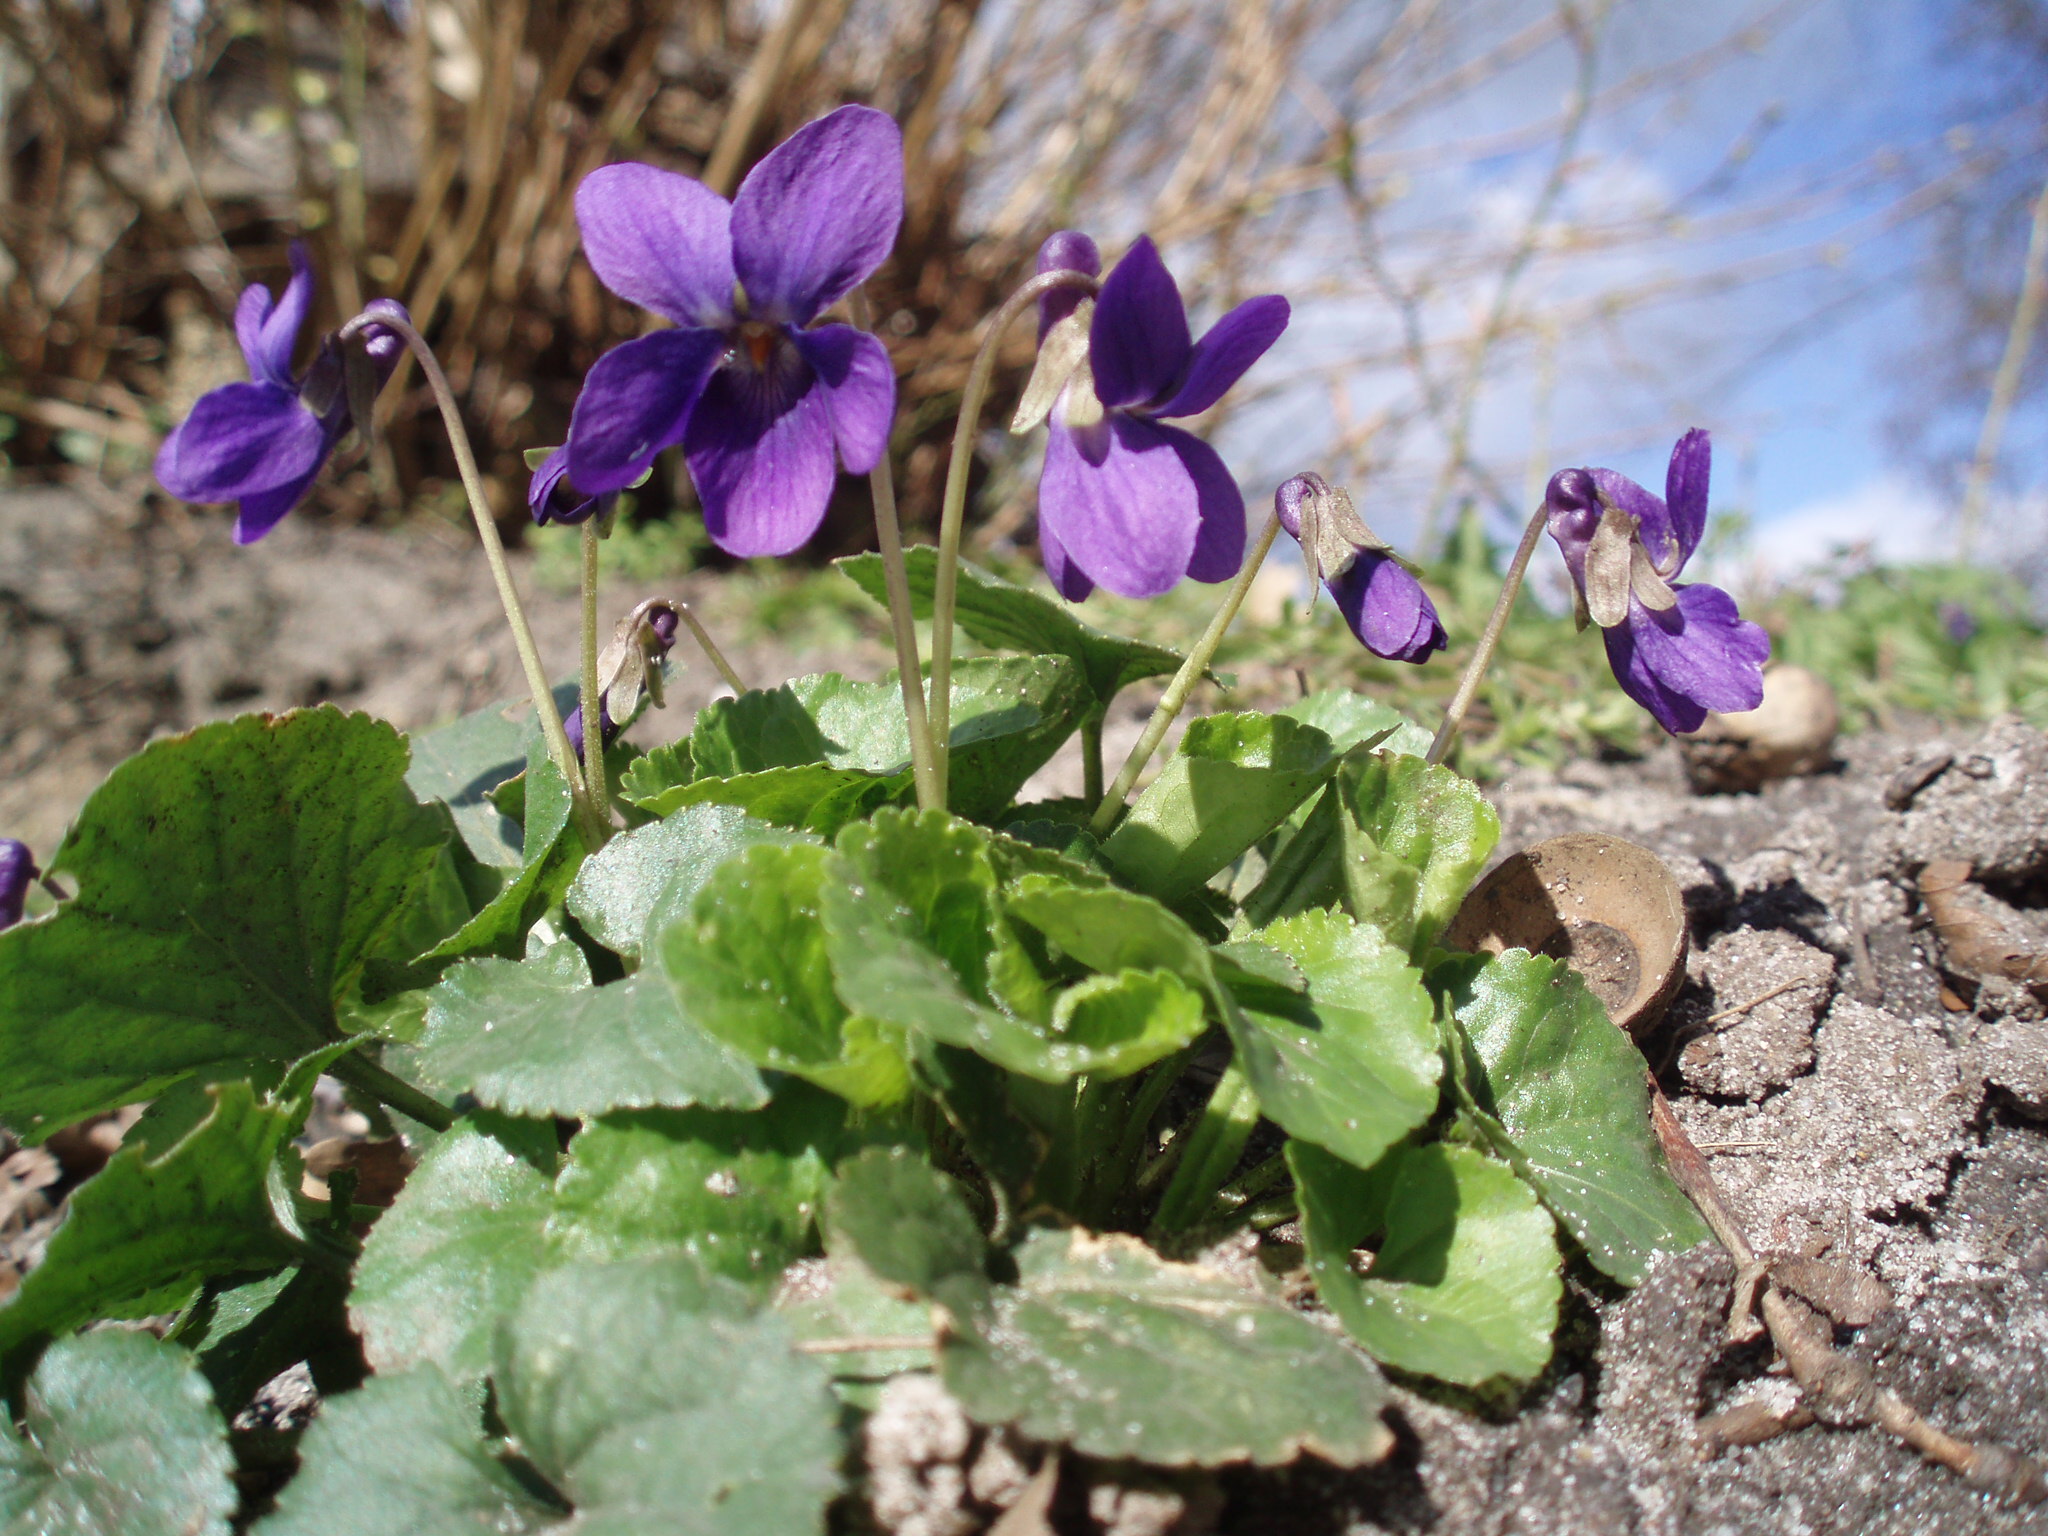 File:Viola odorata Maarts viooltje.JPG - Wikimedia Commons